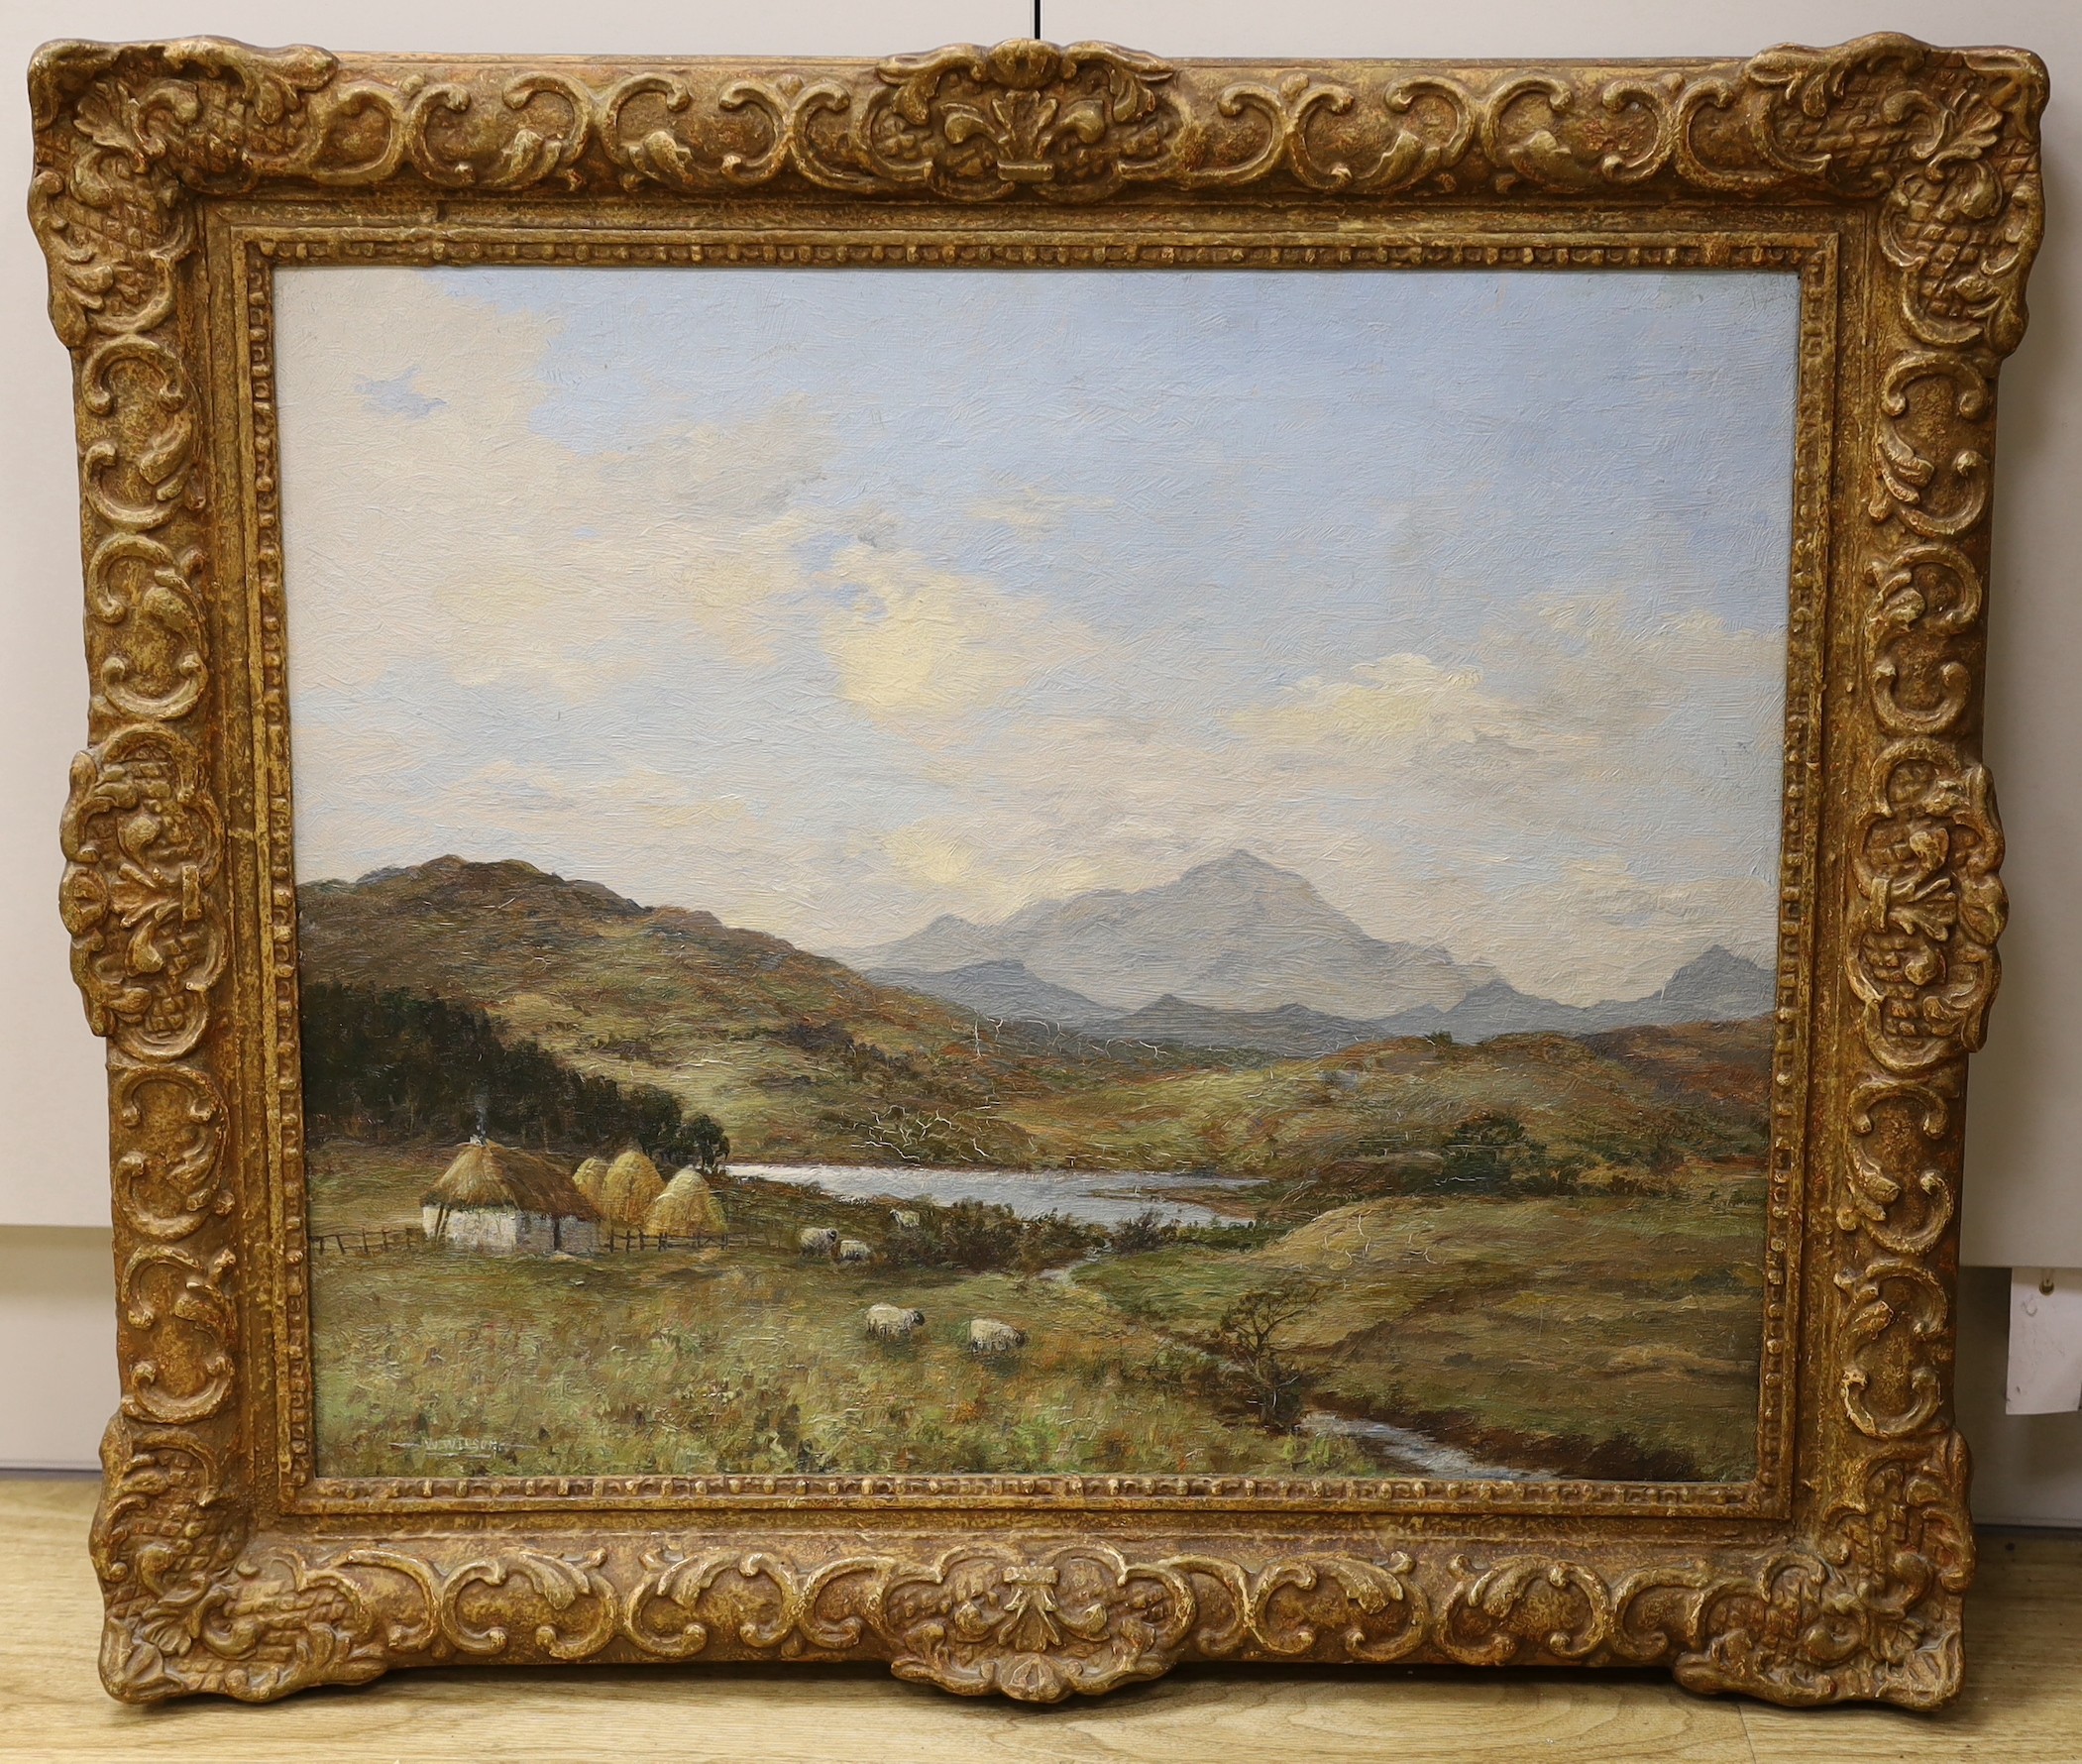 W. Wilson (c.1900), oil on canvas, 'Ben Cruachan', signed, 50 x 60cm